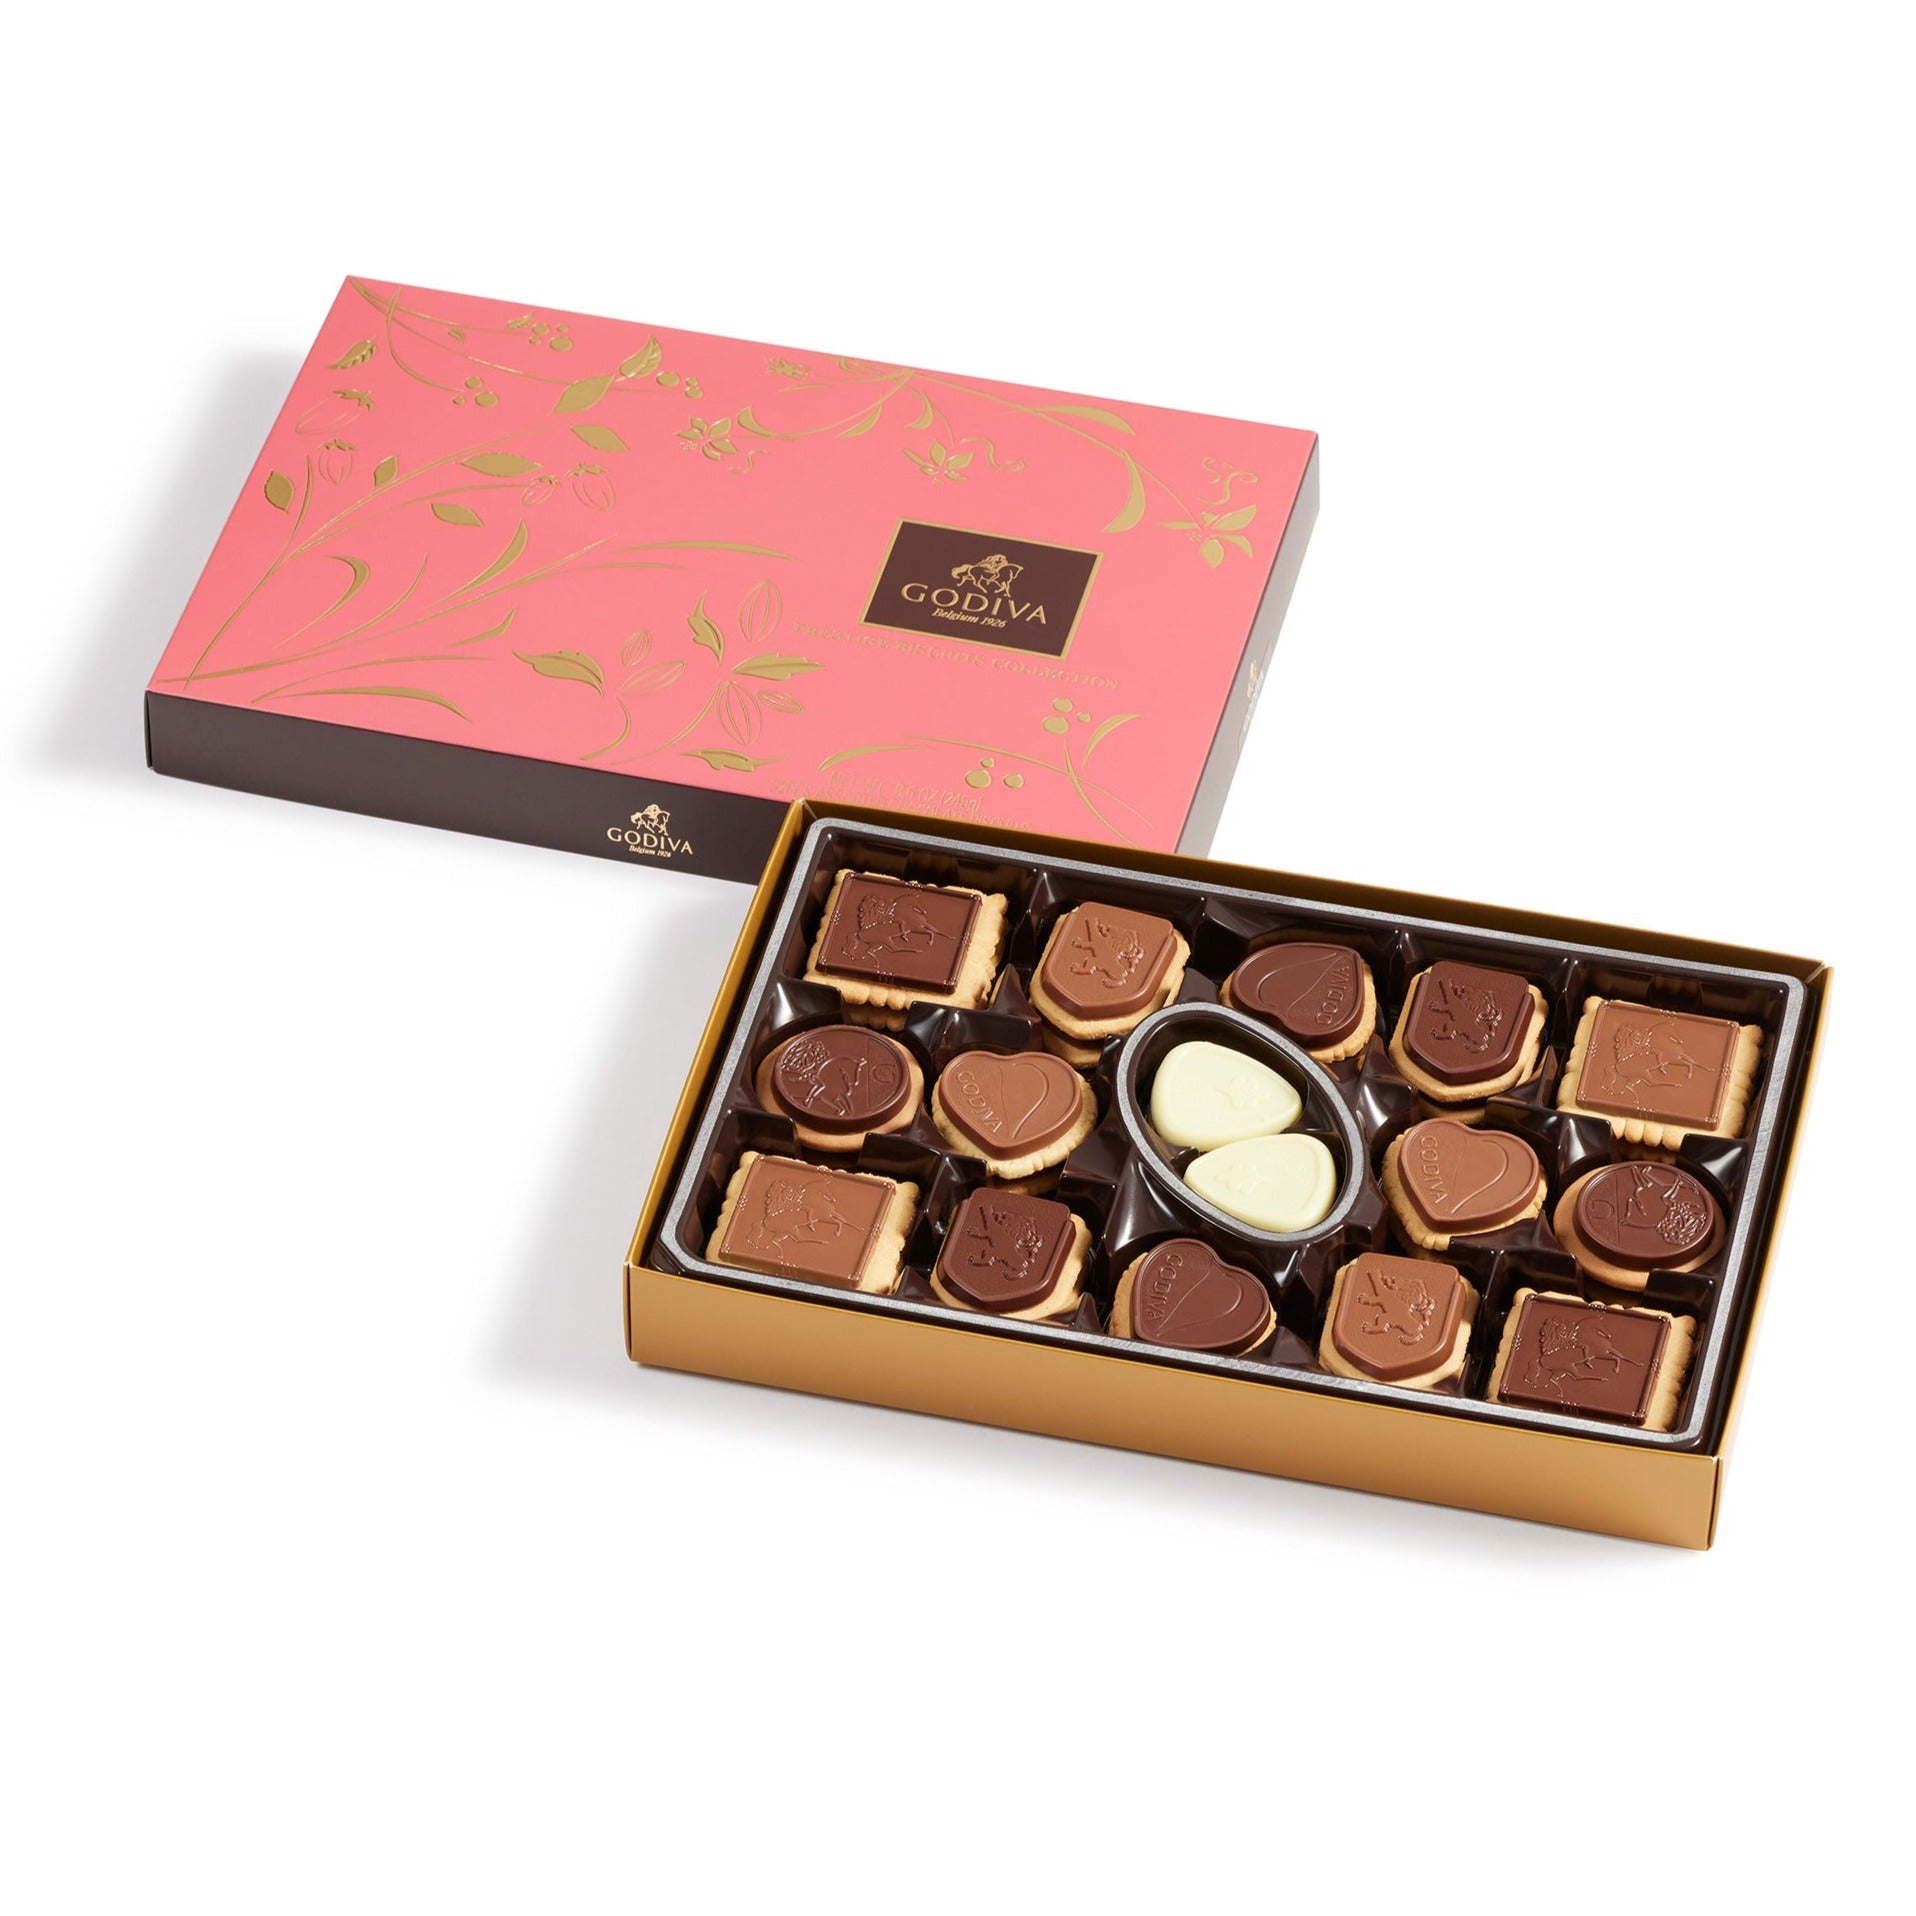 chocolate-biscuits-gift-box-32pc-1.jpg